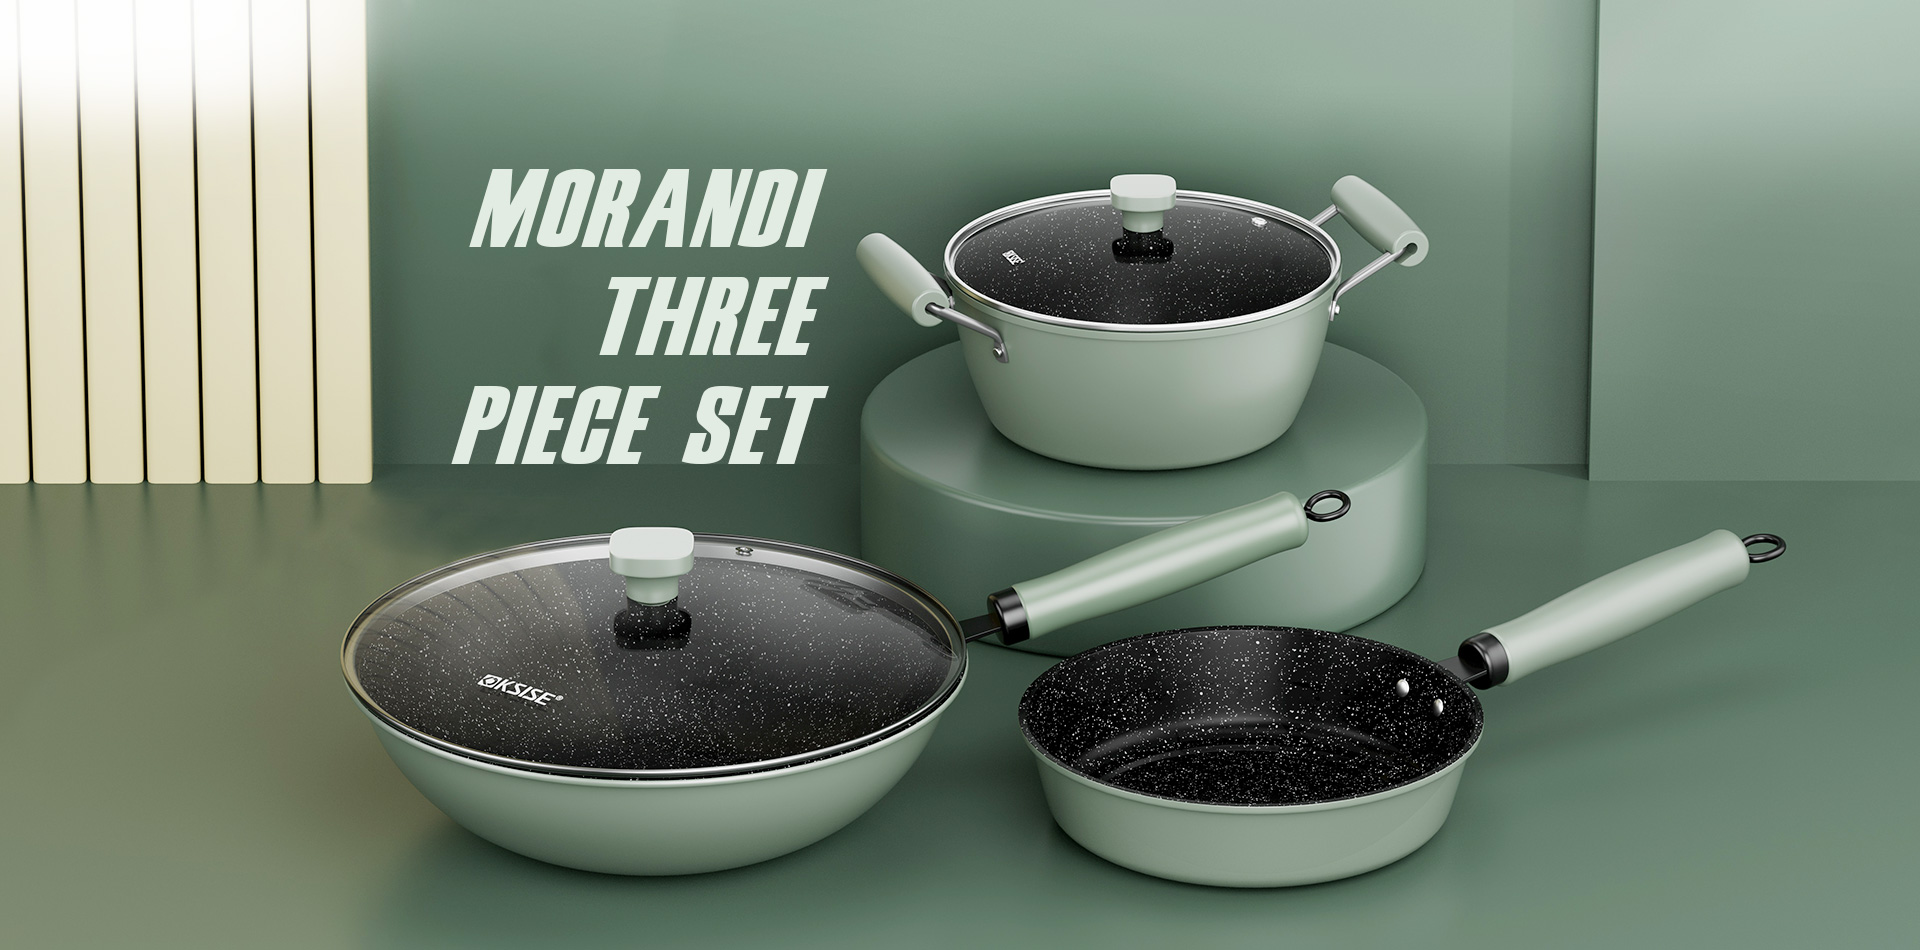 Morandi series·three piece set